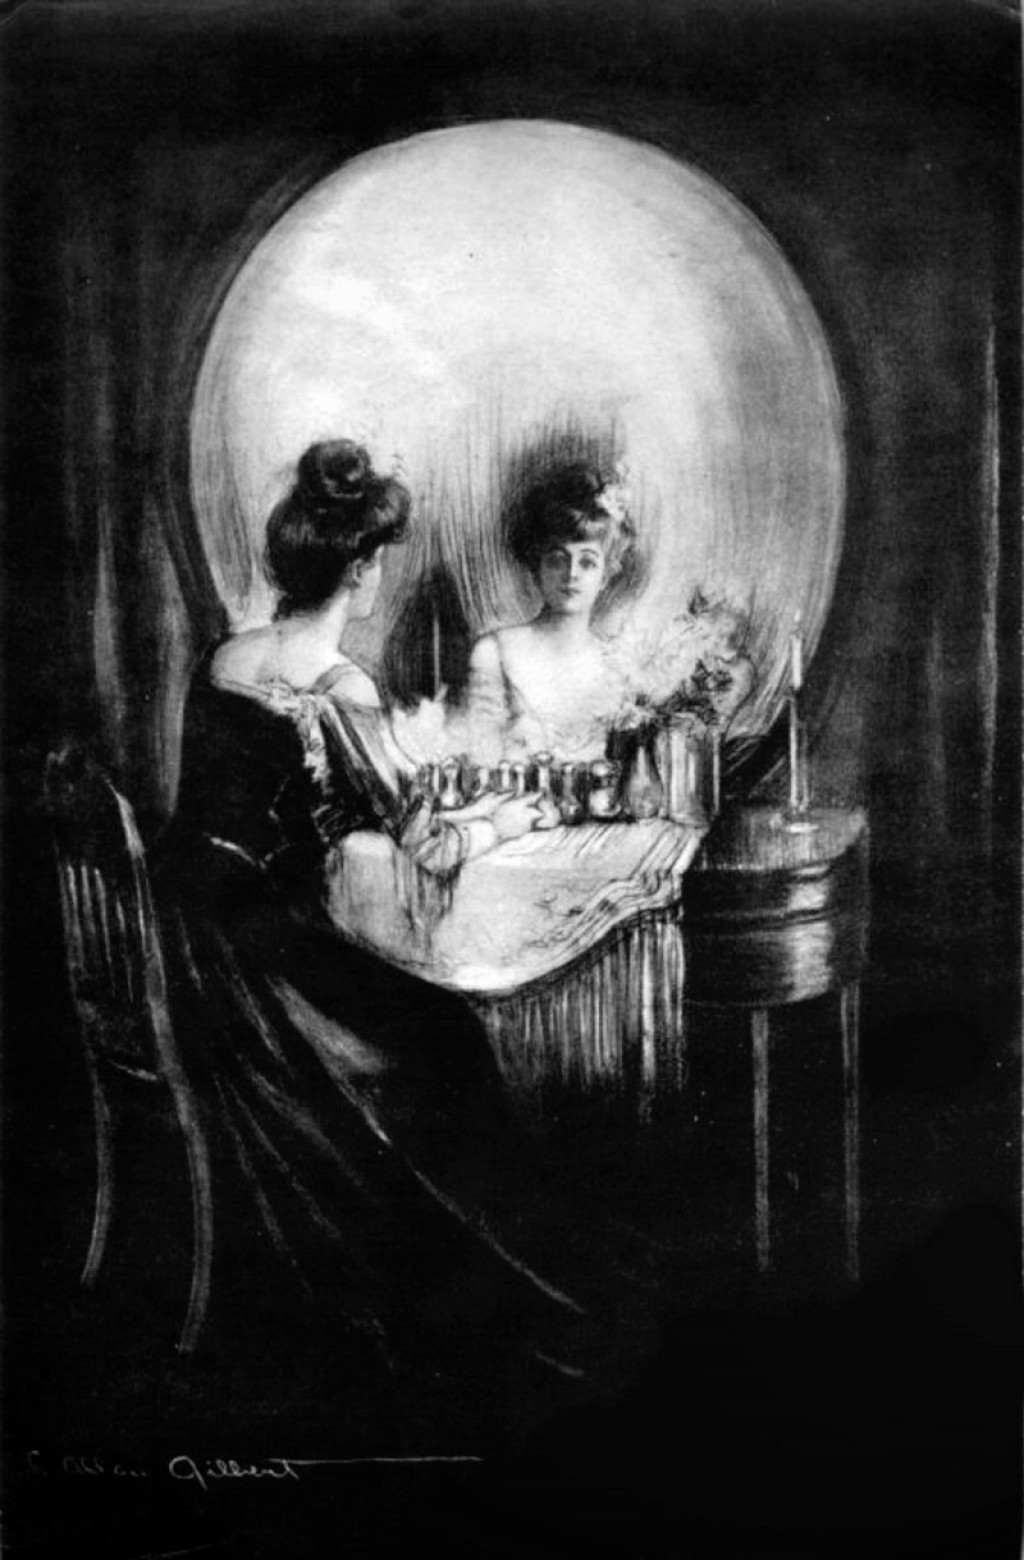 All is Vanity by Charles Allan Gilbert - 1892 - - 